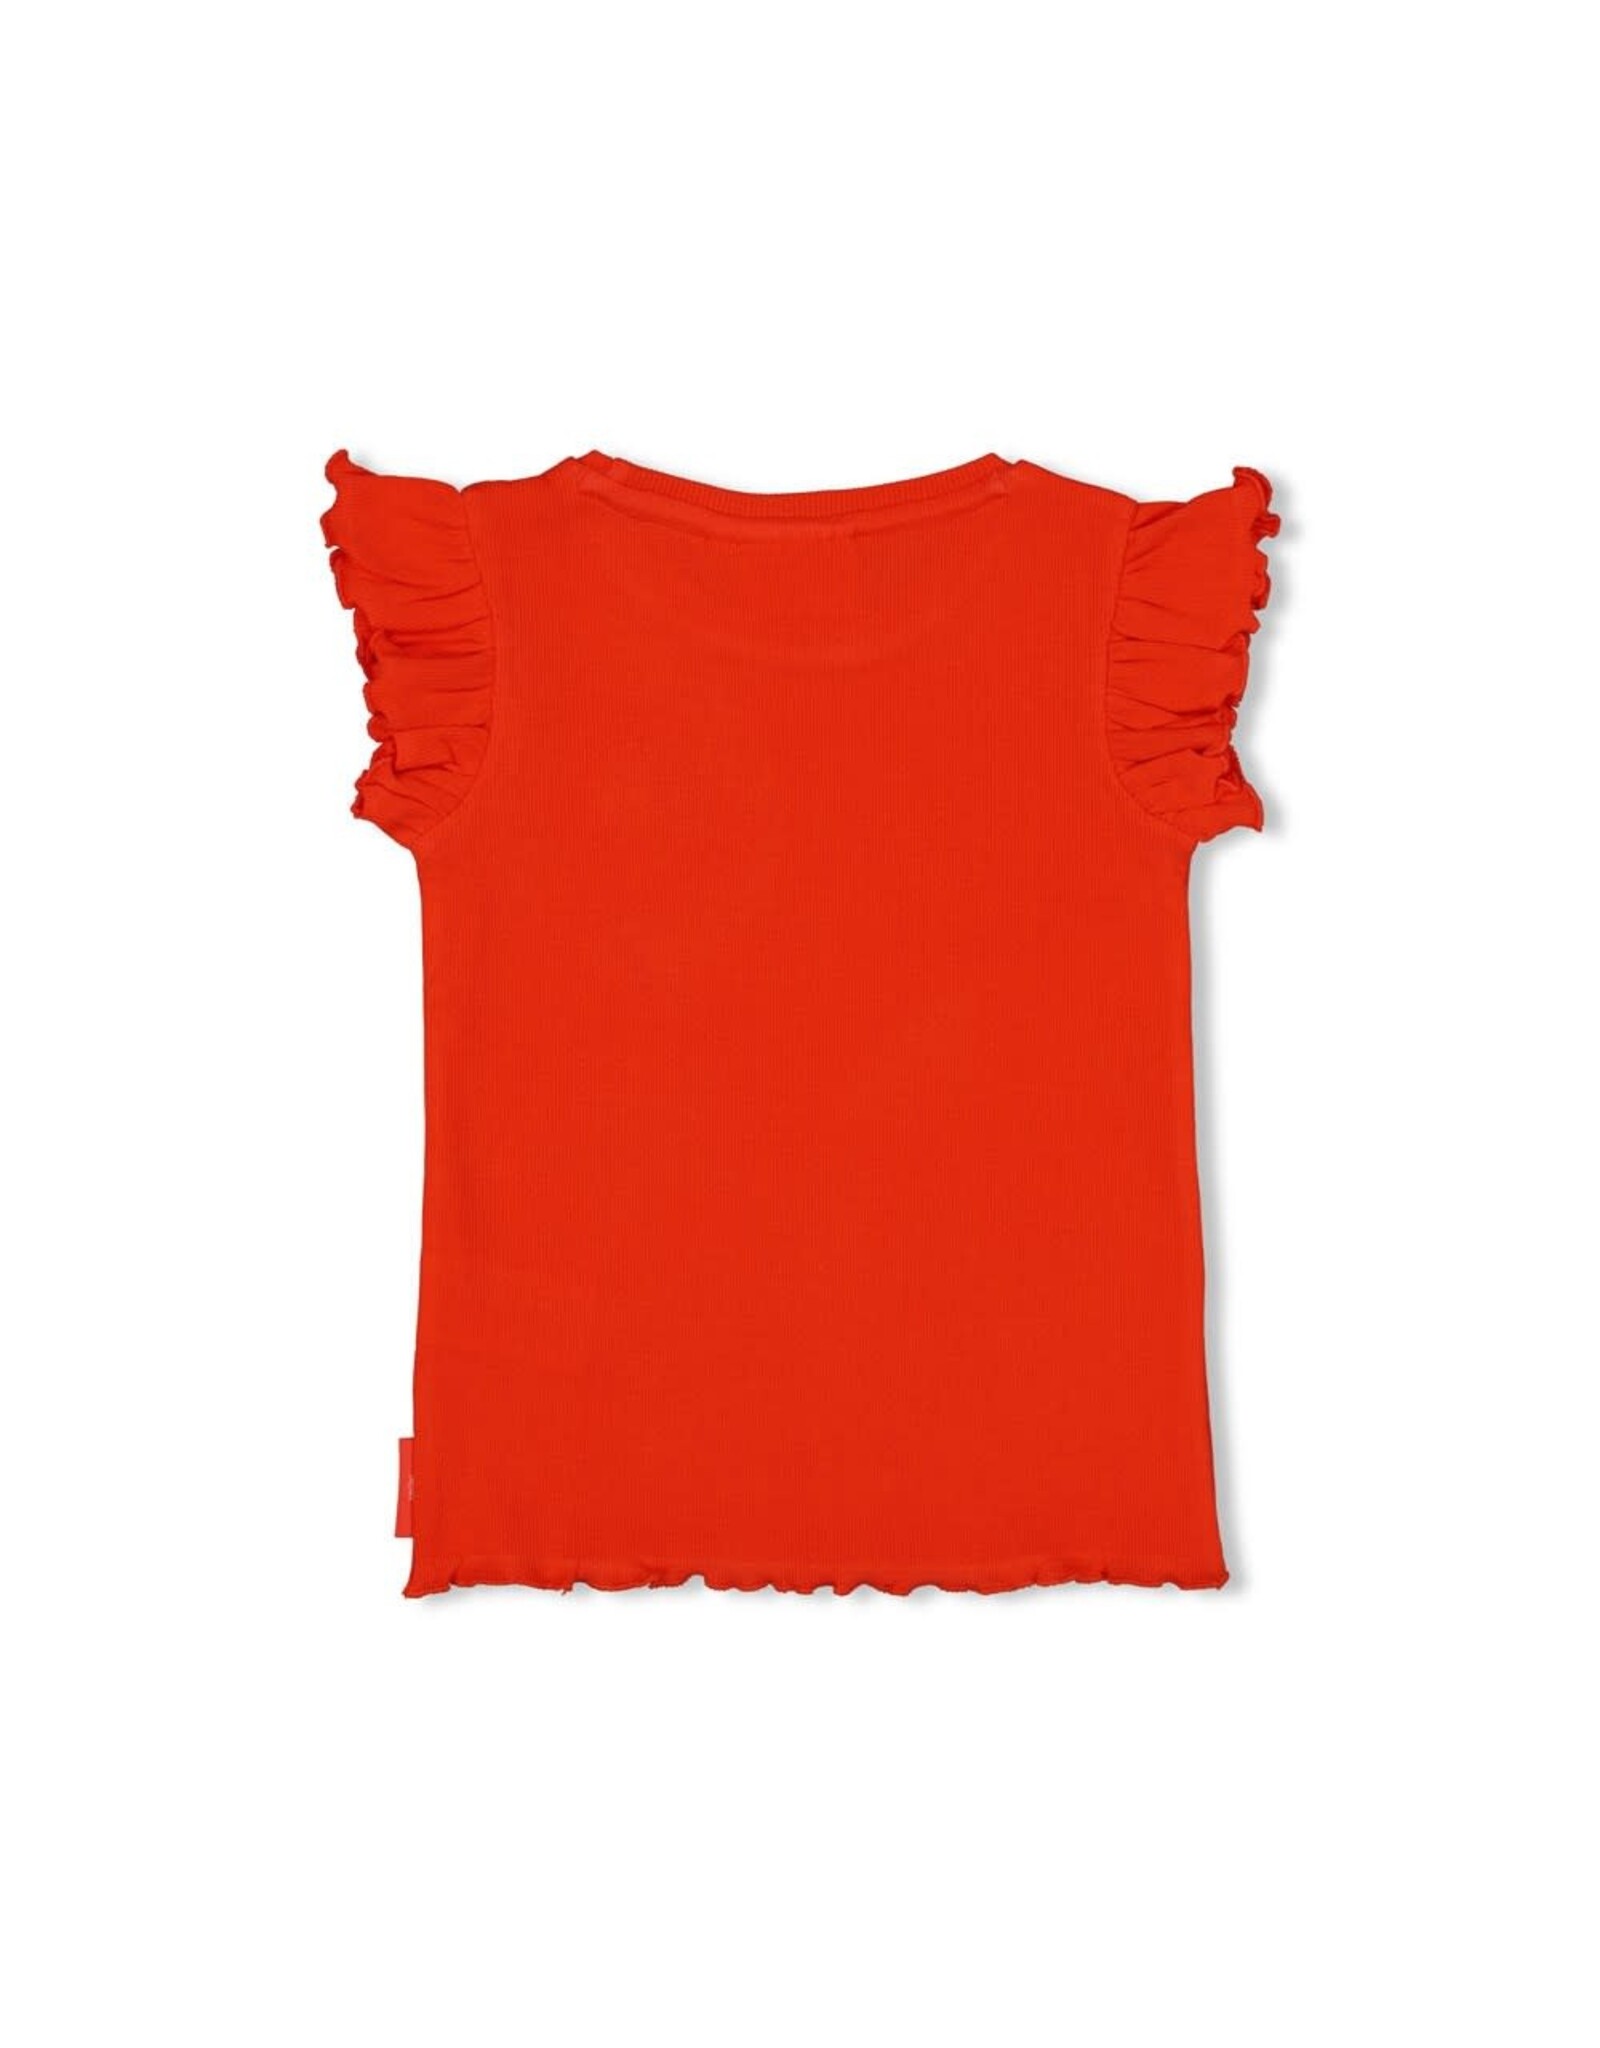 Jubel T-shirt rib - Berry Nice Rood